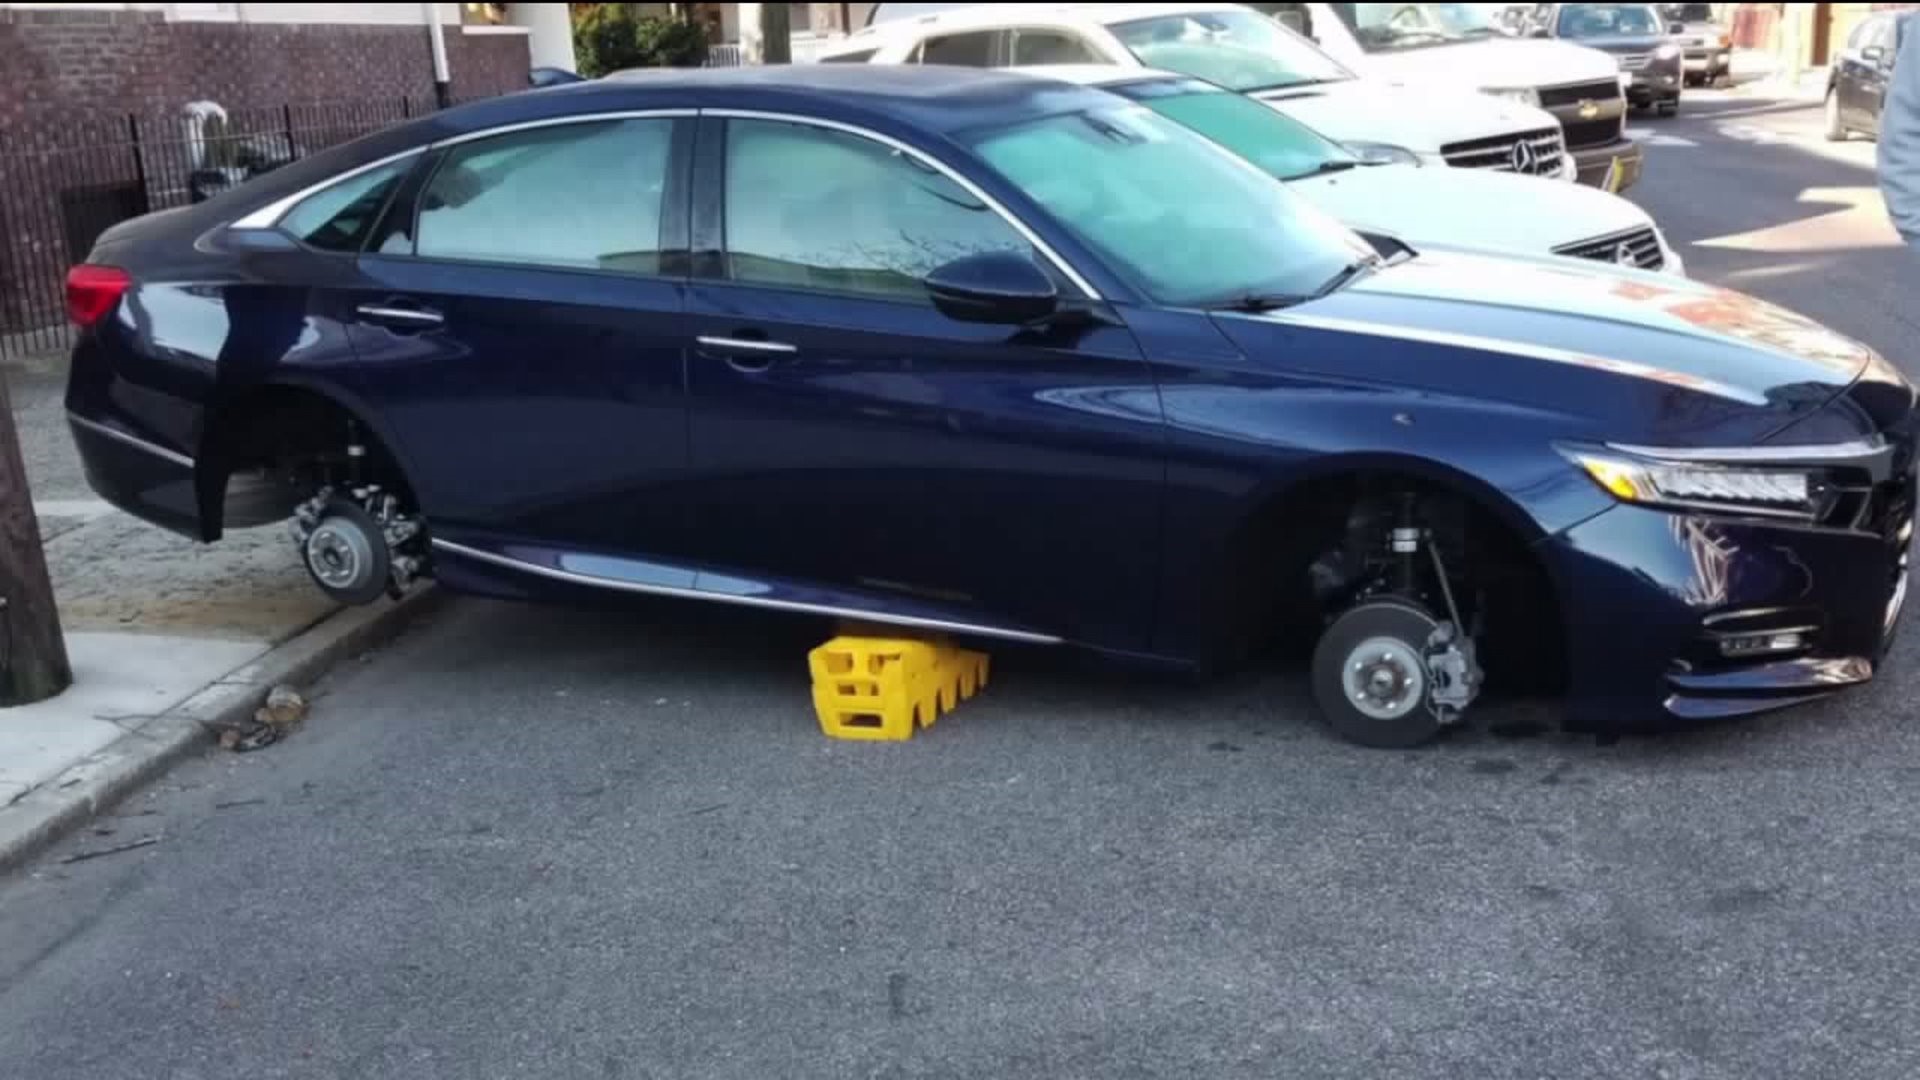 Wheel Stealers Victimize Scranton Honda Dealership